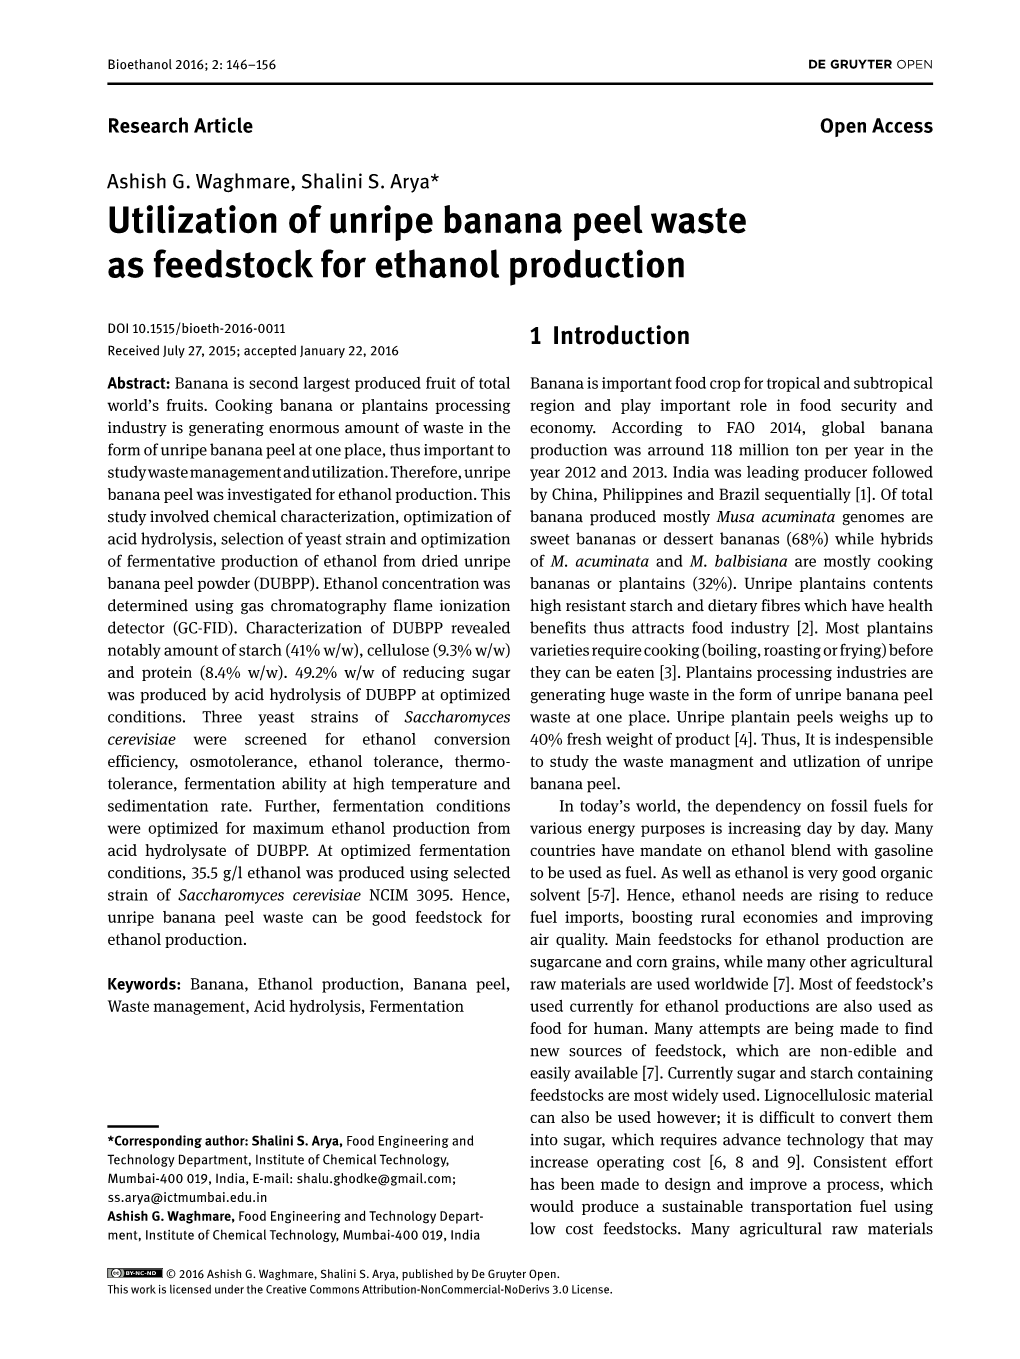 Utilization of Unripe Banana Peel Waste As Feedstock for Ethanol Production